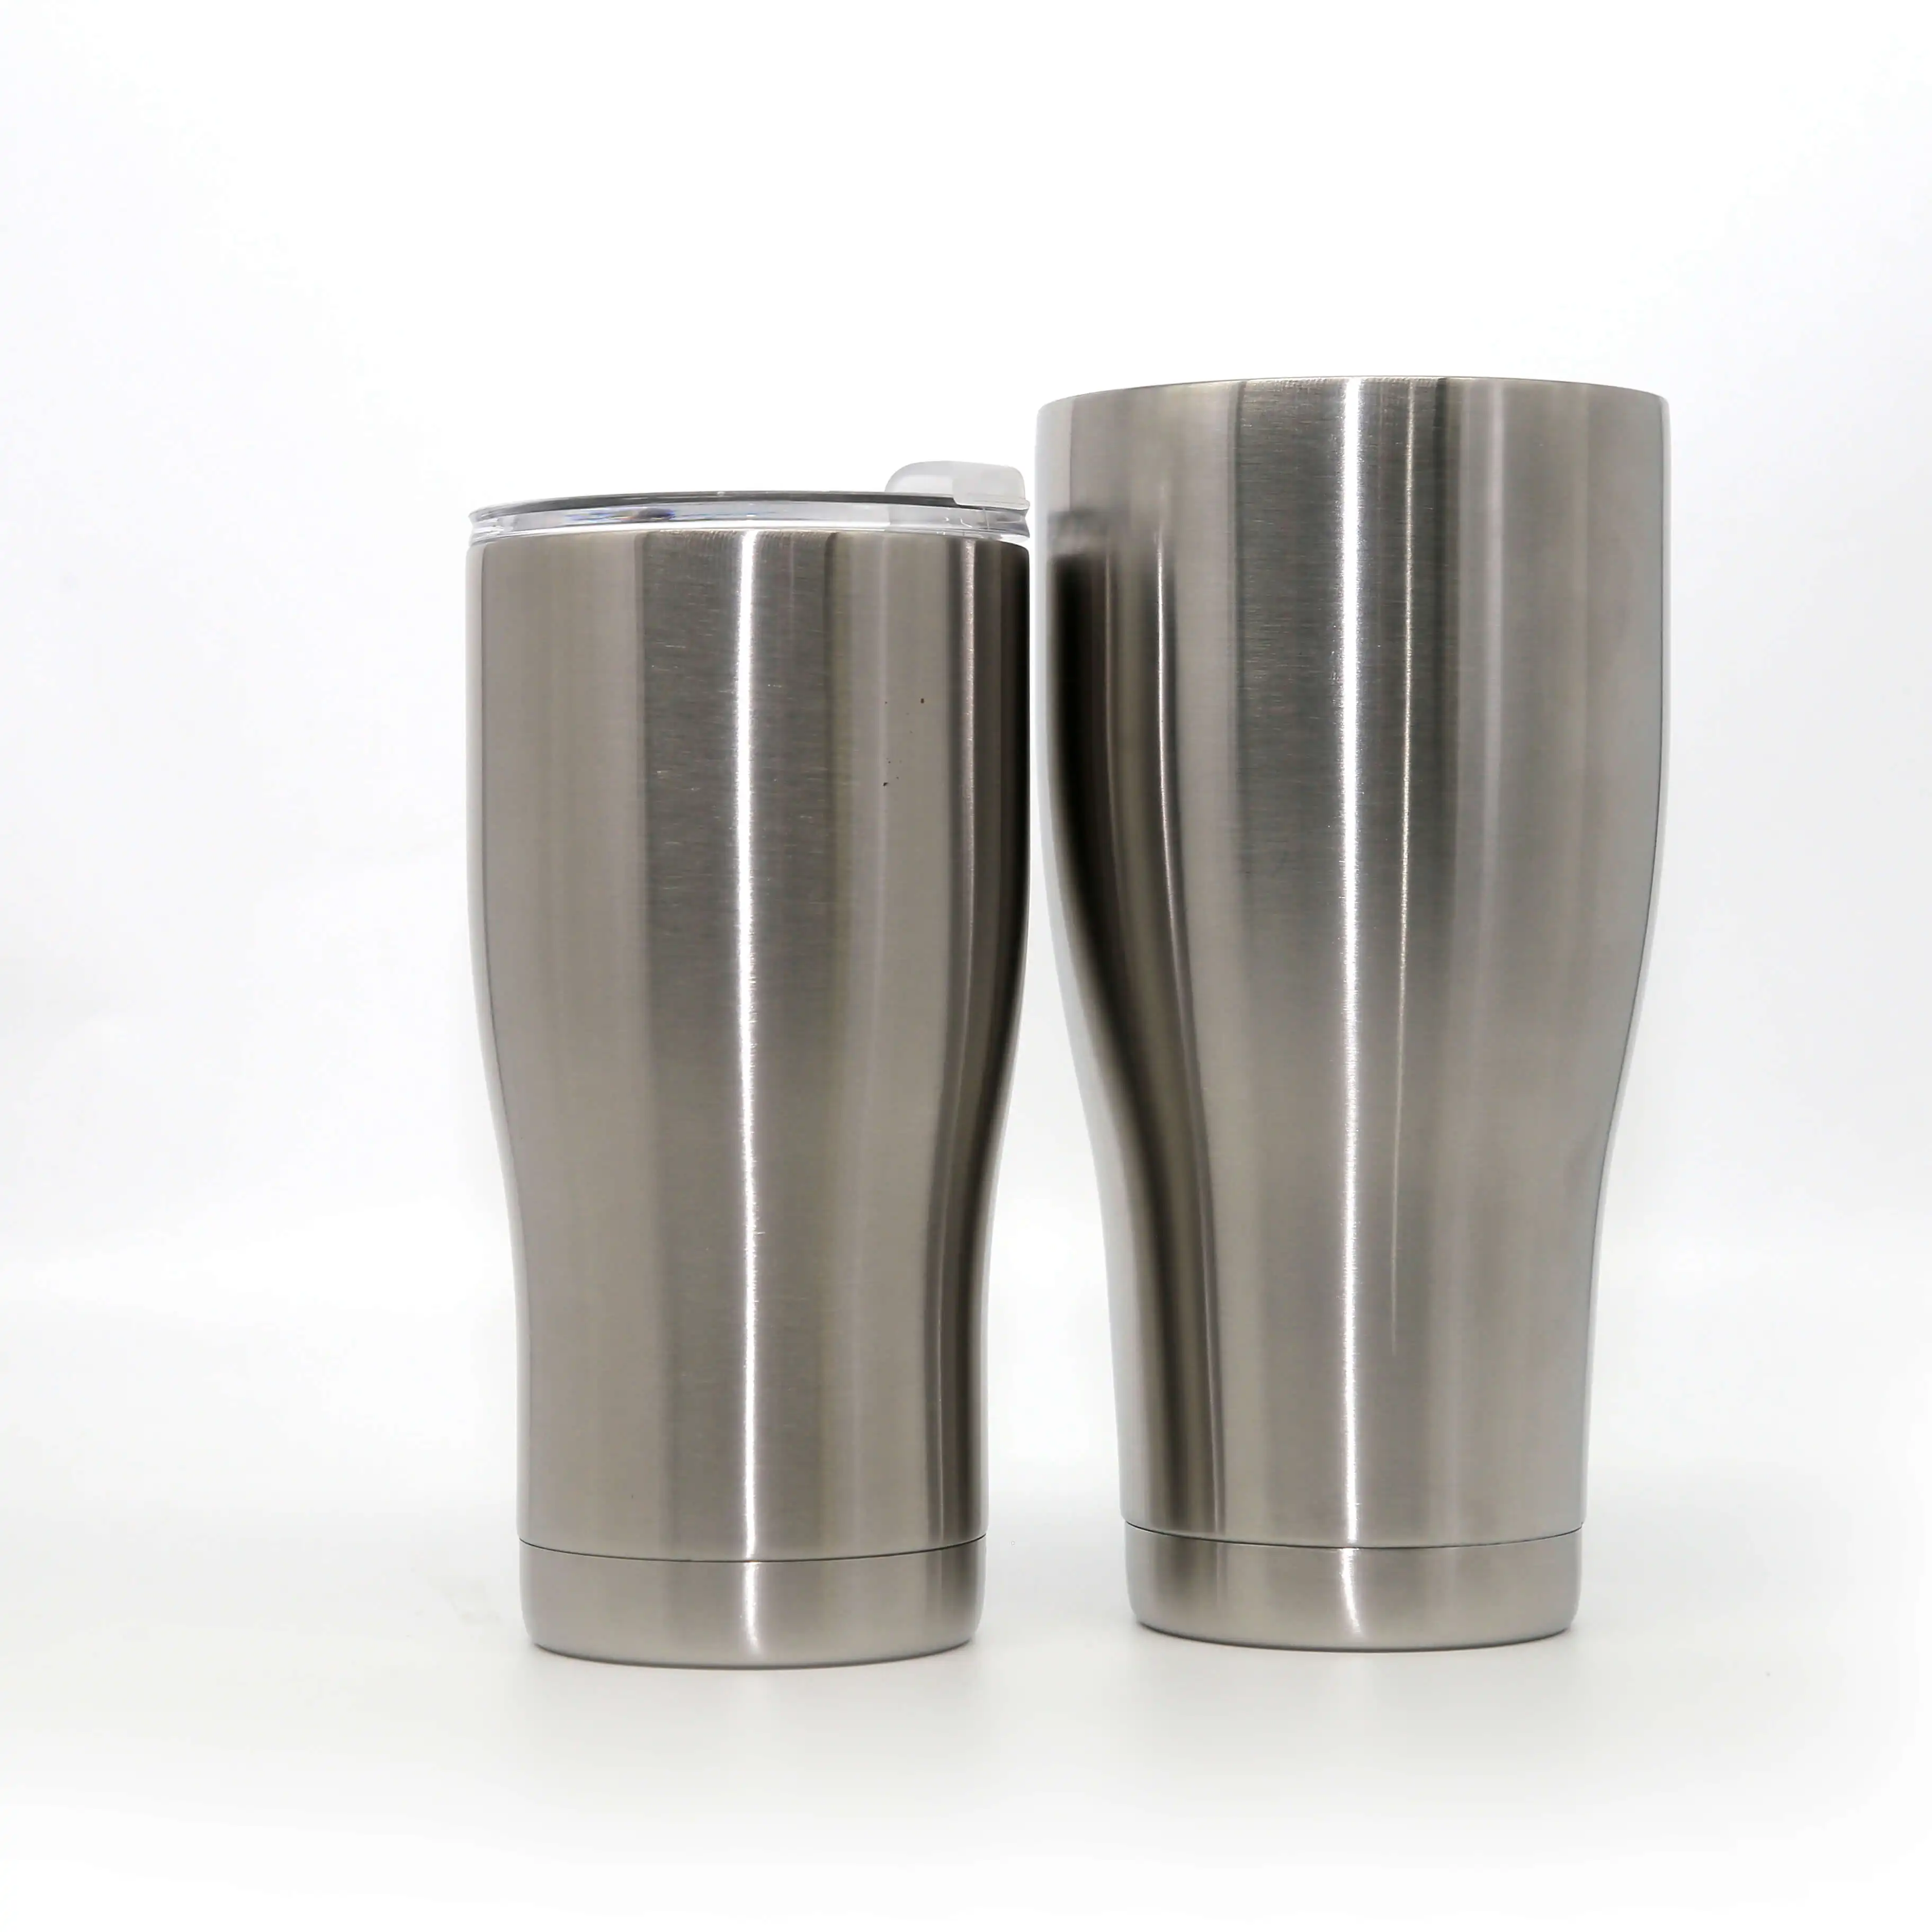 Wholesale Vacuum Insulated Stainless Steel Coffee Tumbler Mug